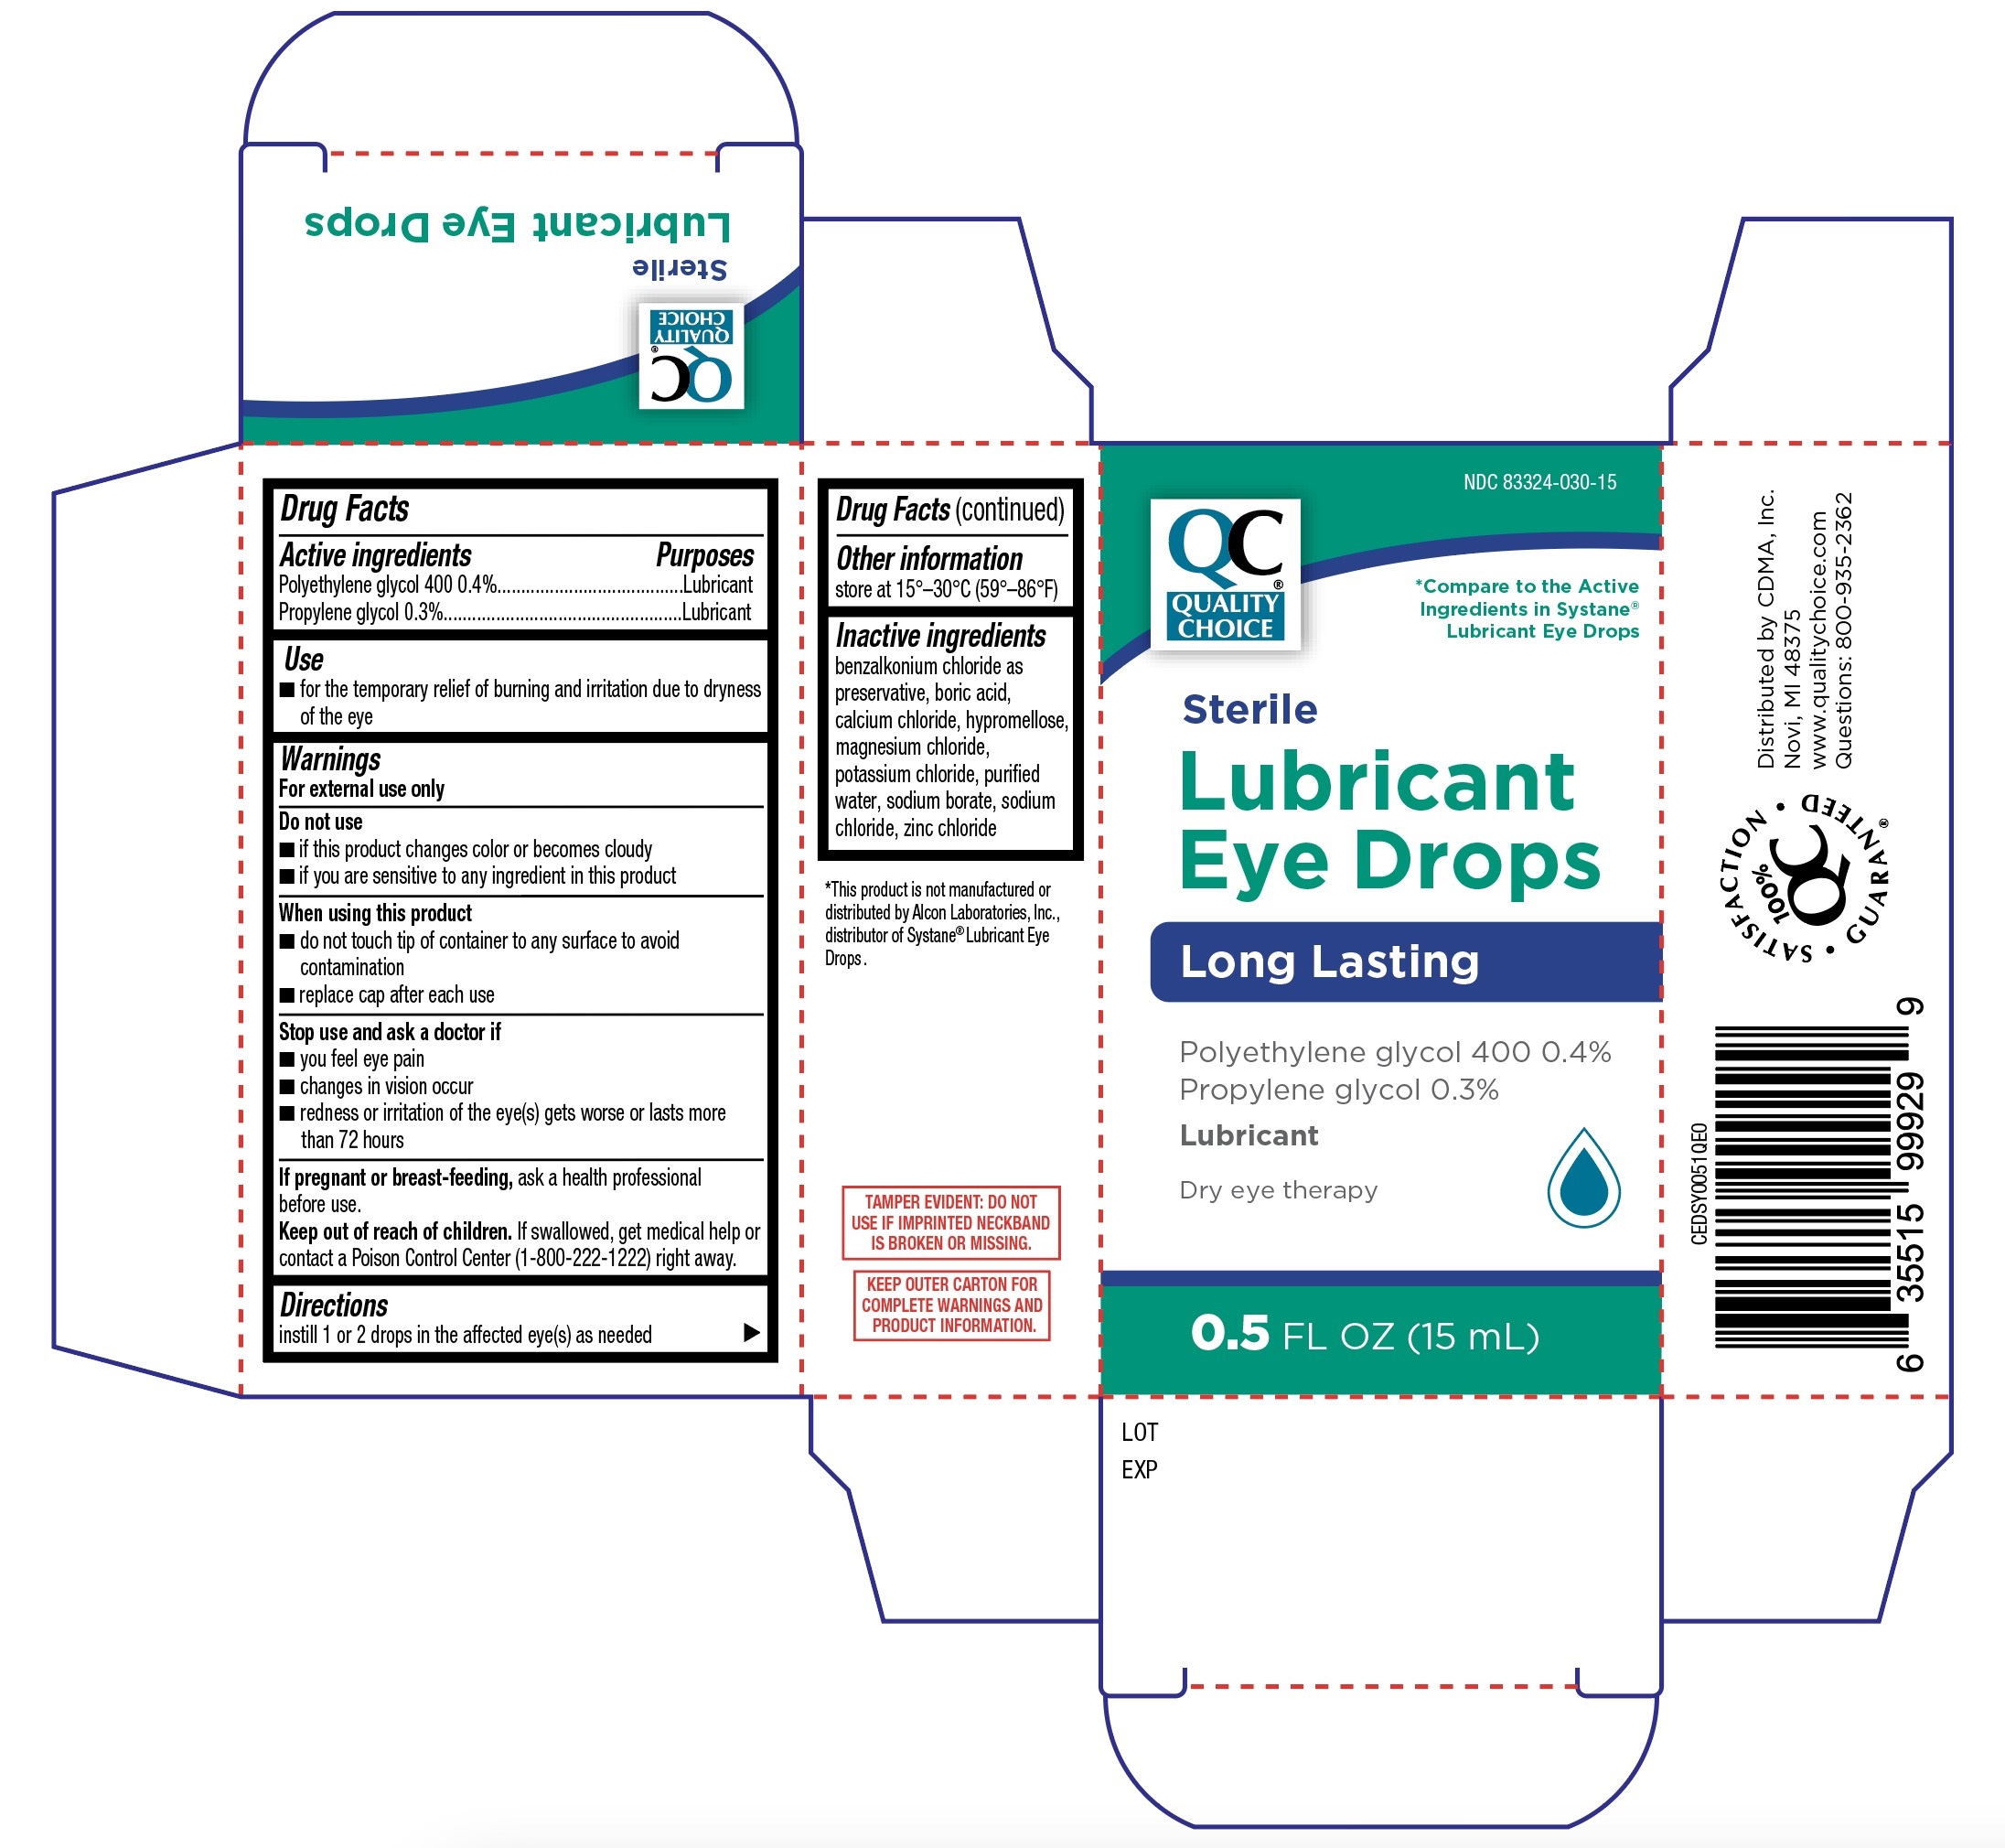 Quality Choice Lubricant Eye Drops Long Lasting 15mL